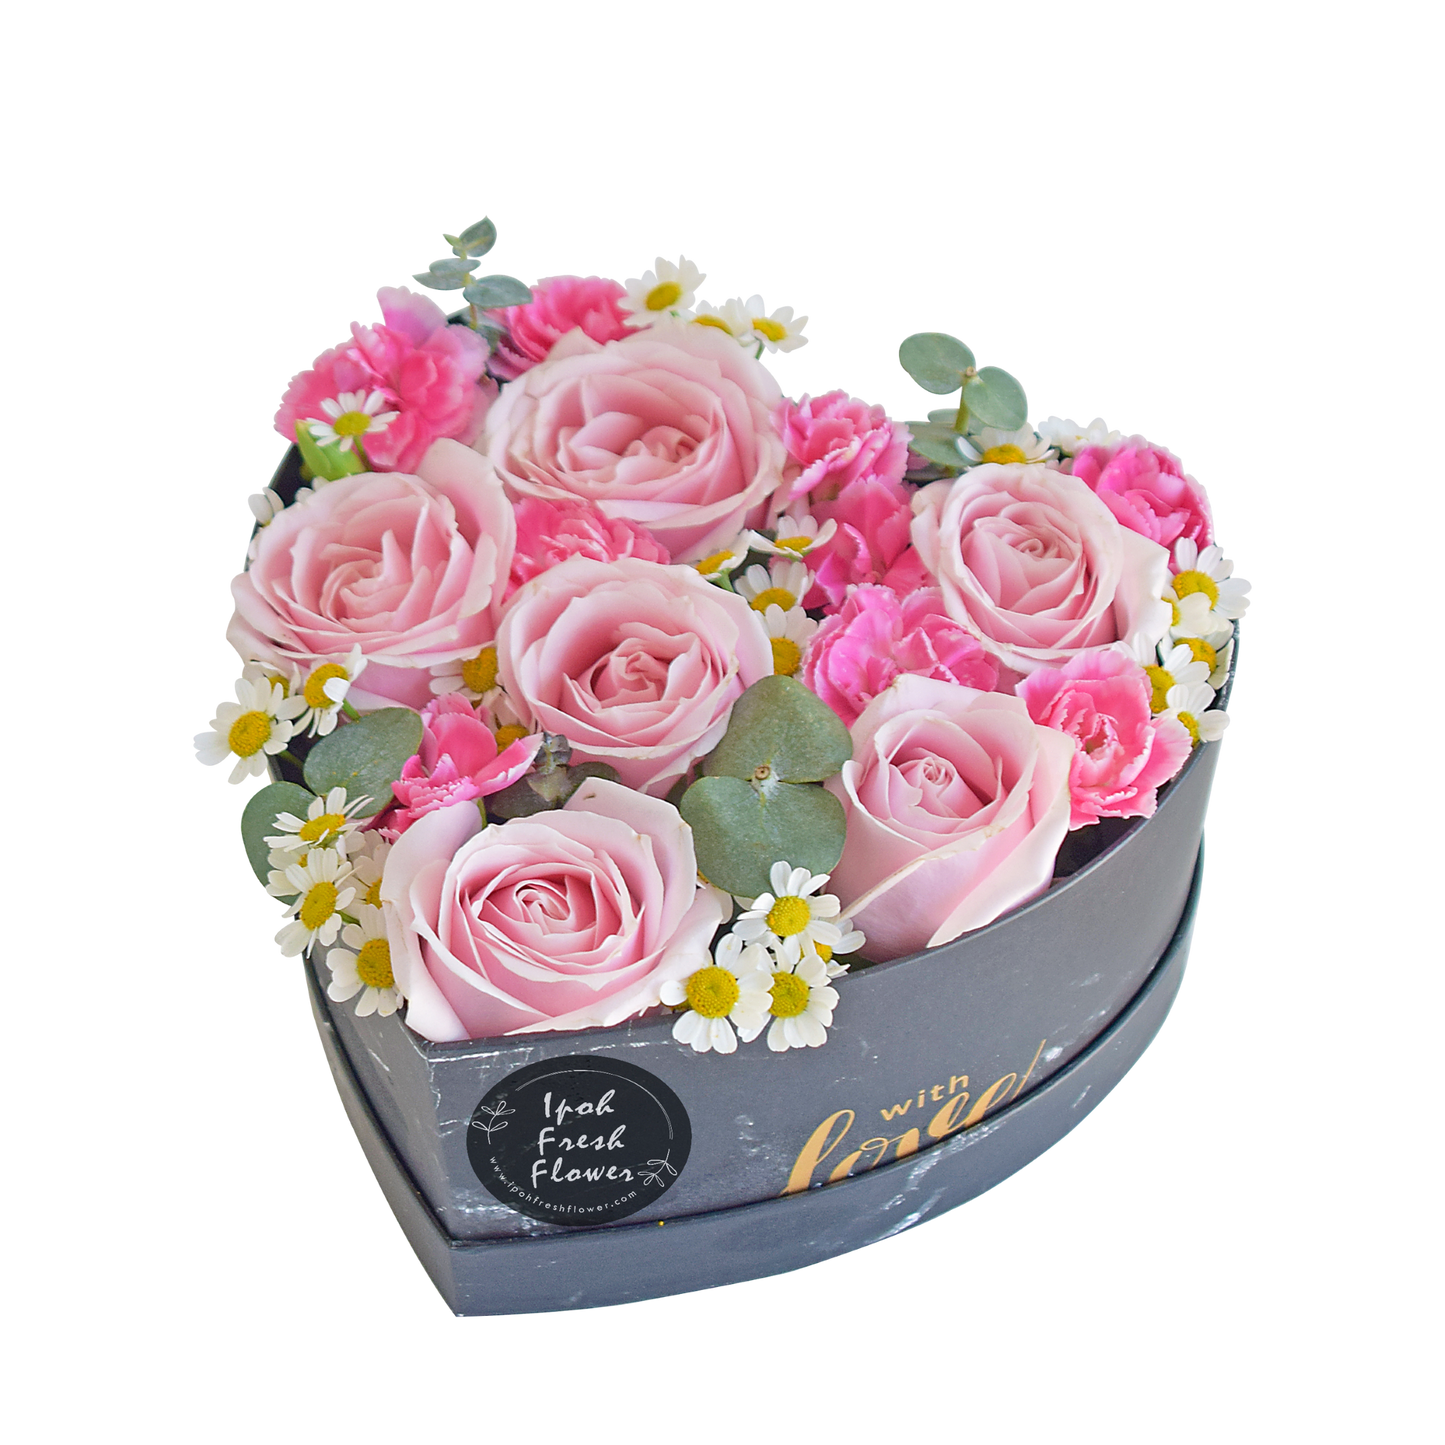 Aleesia Heart Box| Fresh Flower Gift Box Delivery